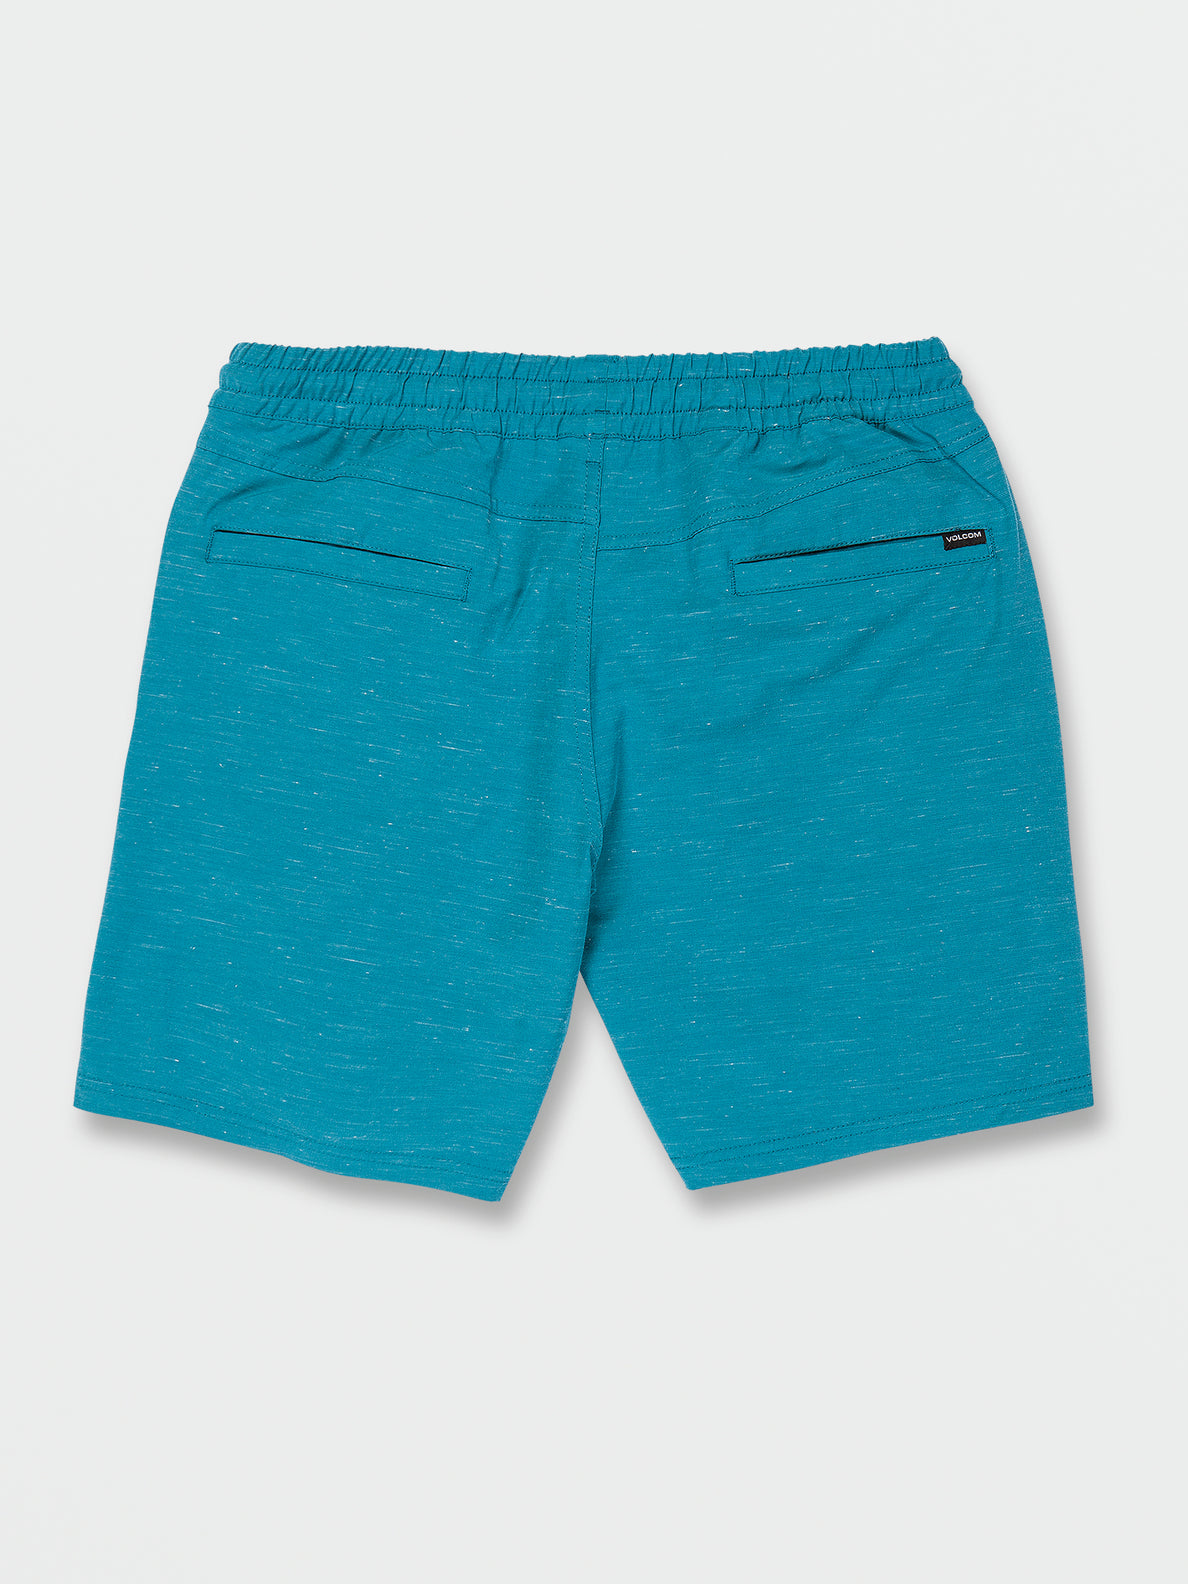 Understoned Hybrid Shorts - Ocean Teal